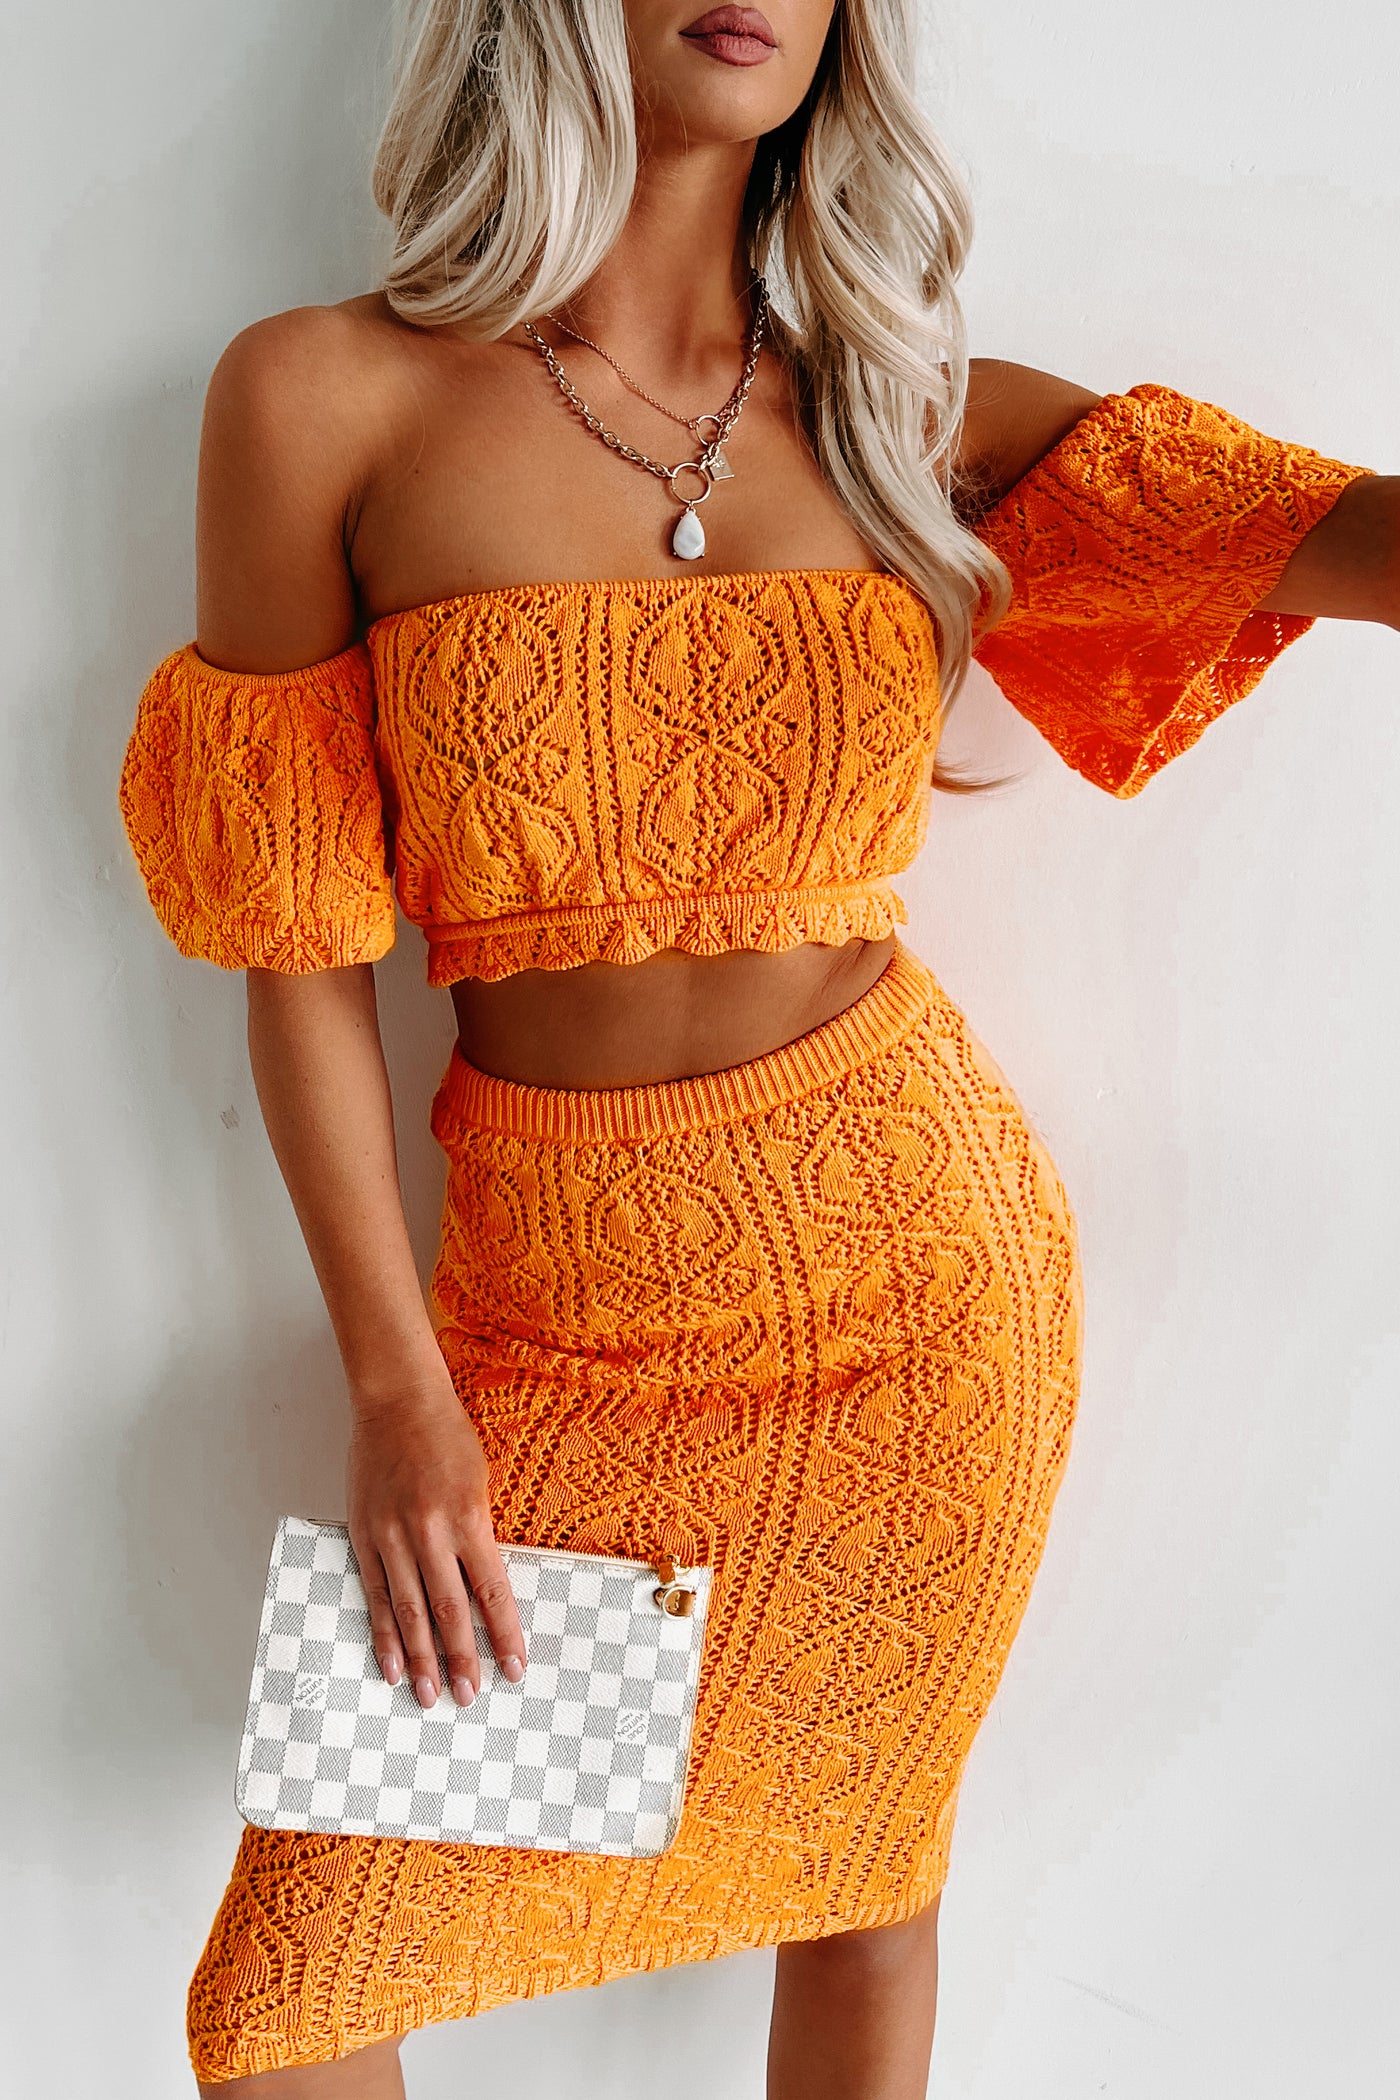 Two Piece Gradient Orange Swimsuit Plus Size Tube Top Skirt